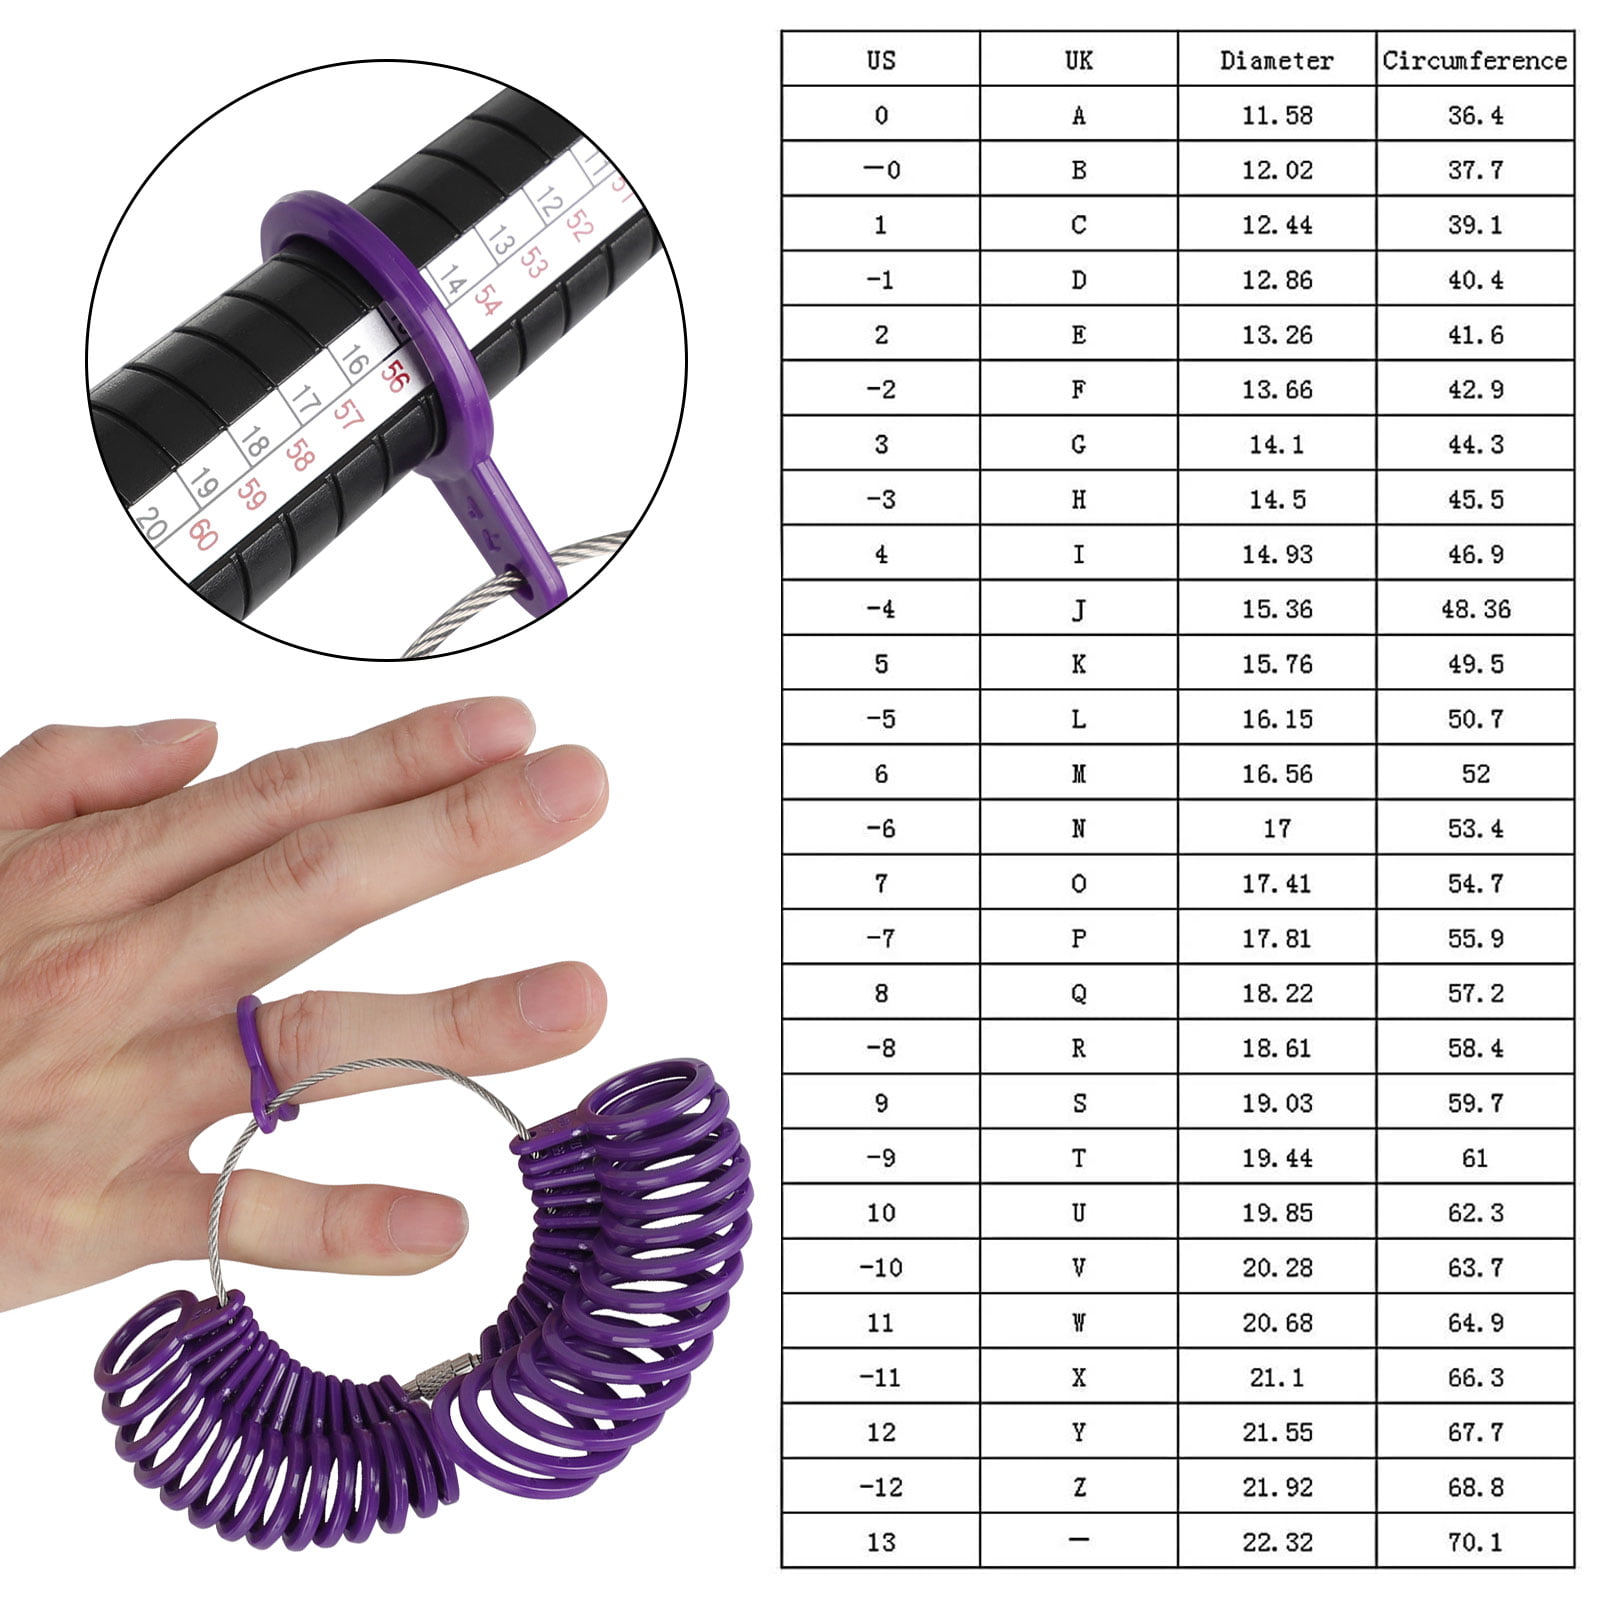 Ring Sizer Measuring Tool Finger Ring Mandrel, EEEkit Ring Gauge Black Finger Sizer Stick, Finger Sizing Measurement Jewelry Making Tools Set with